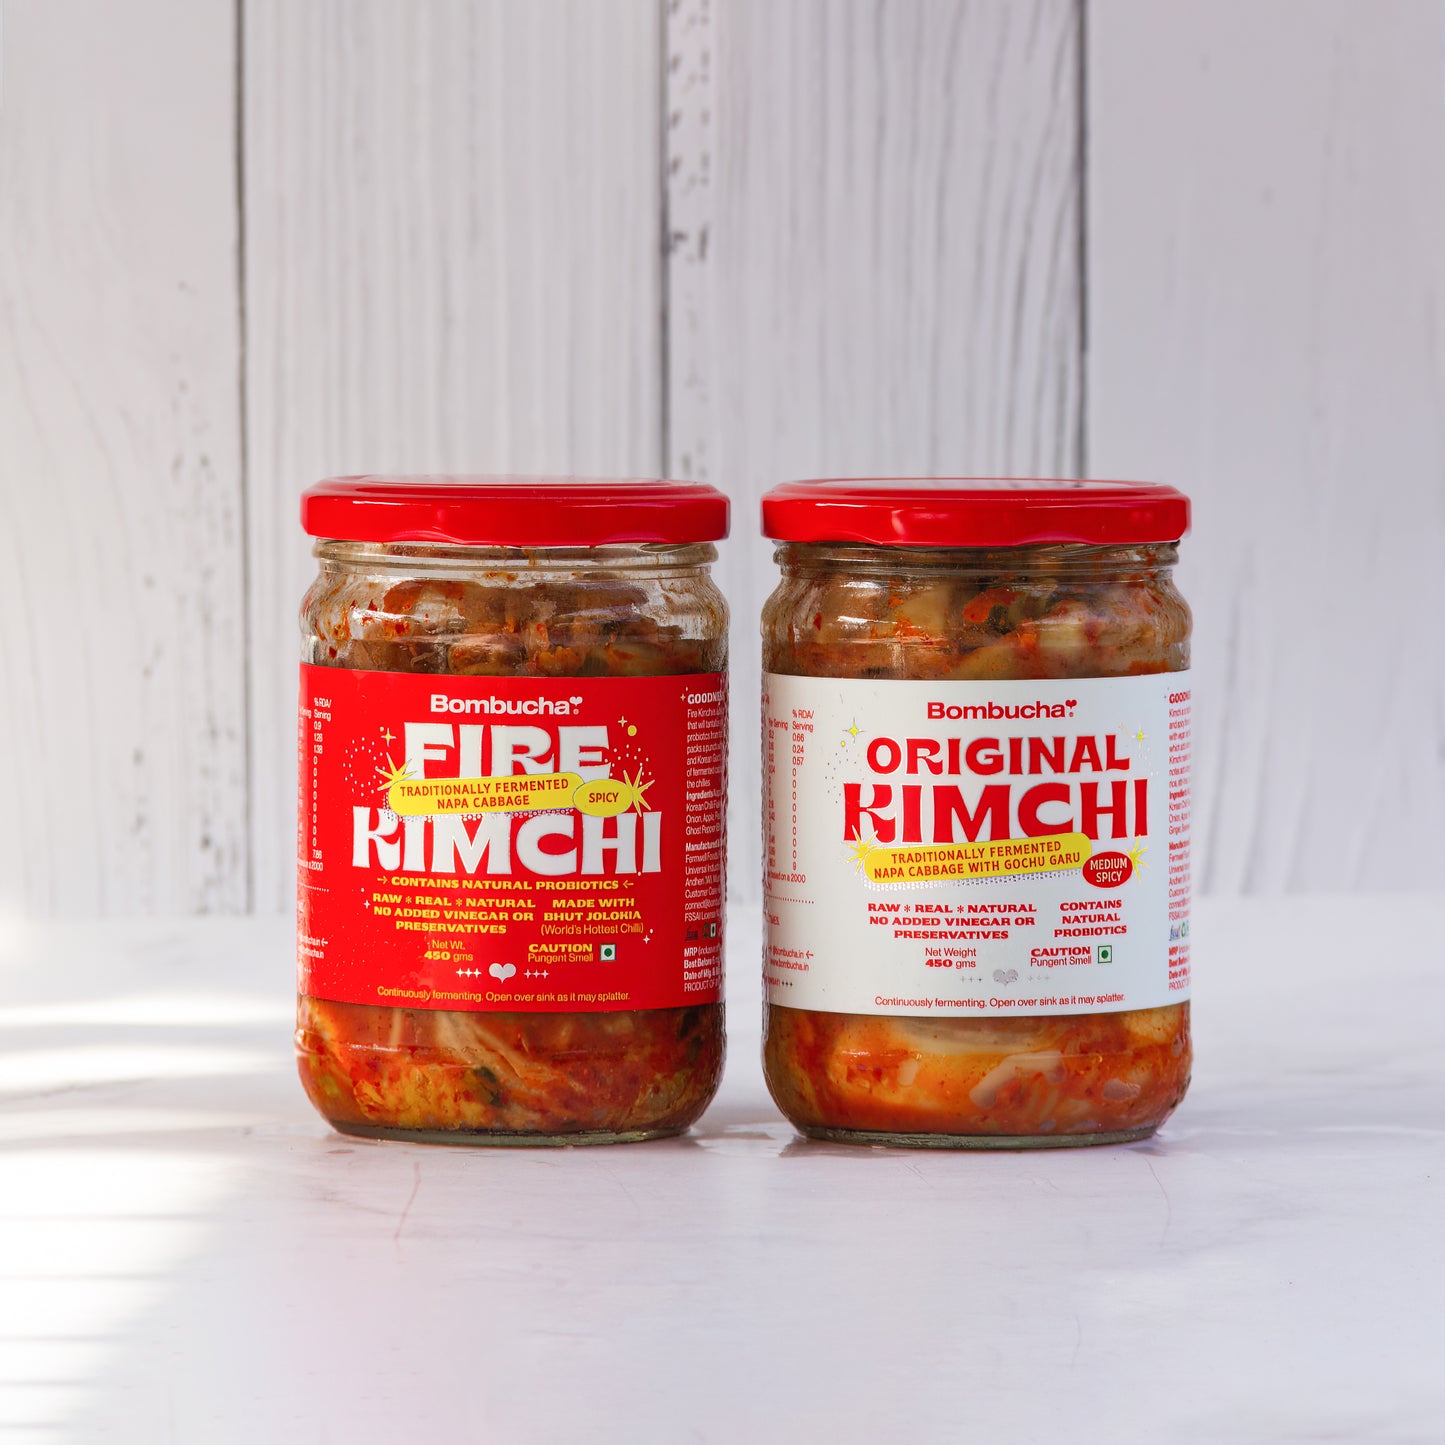 Kimchi Duo Pack- Original + Fire Kimchi (NCR)